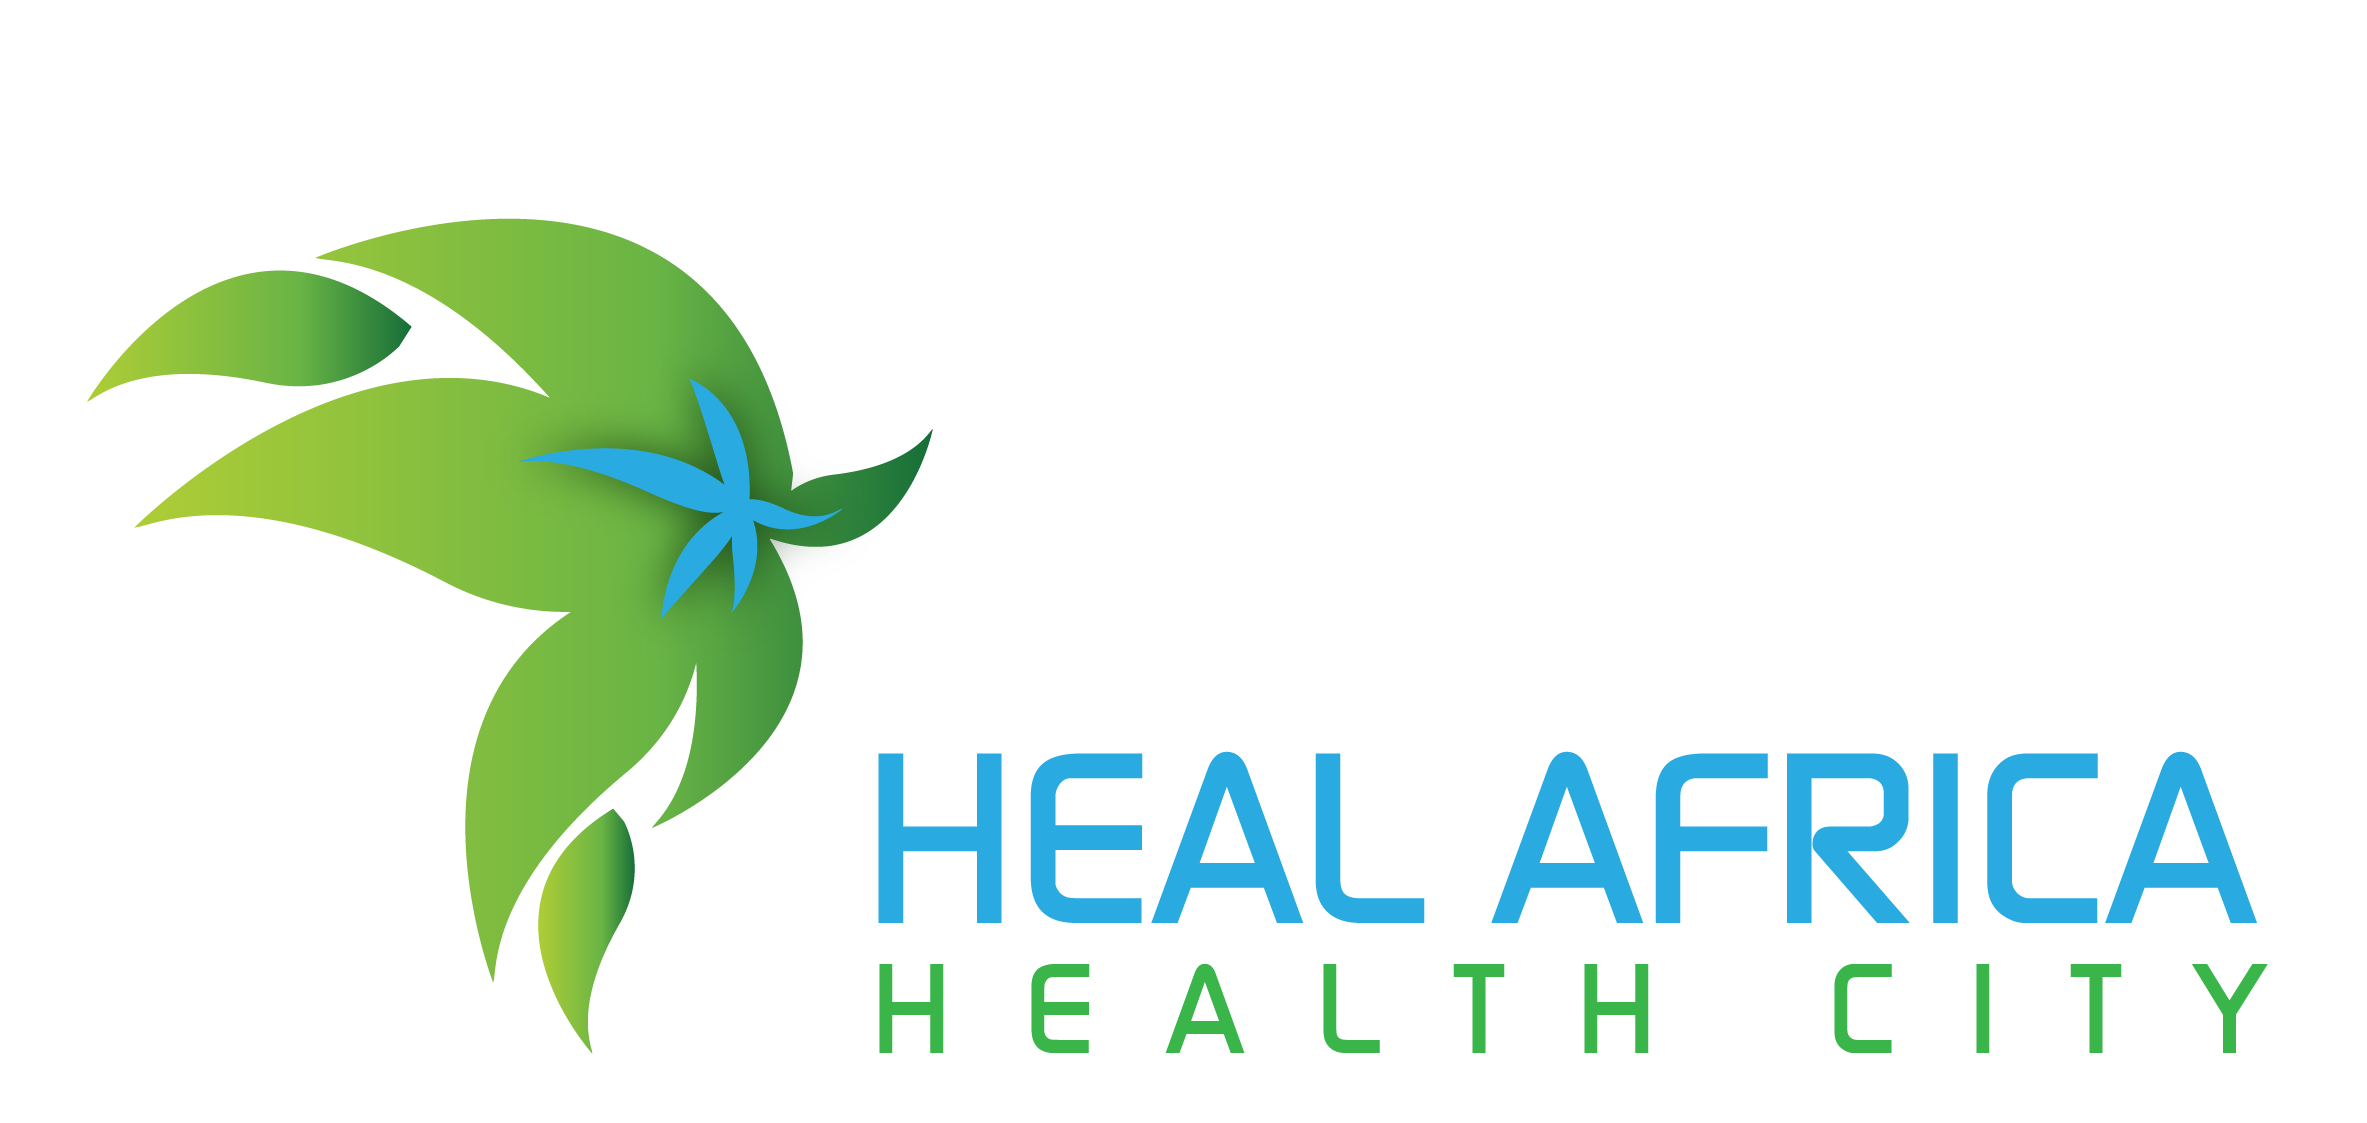 Heal Africa Health City